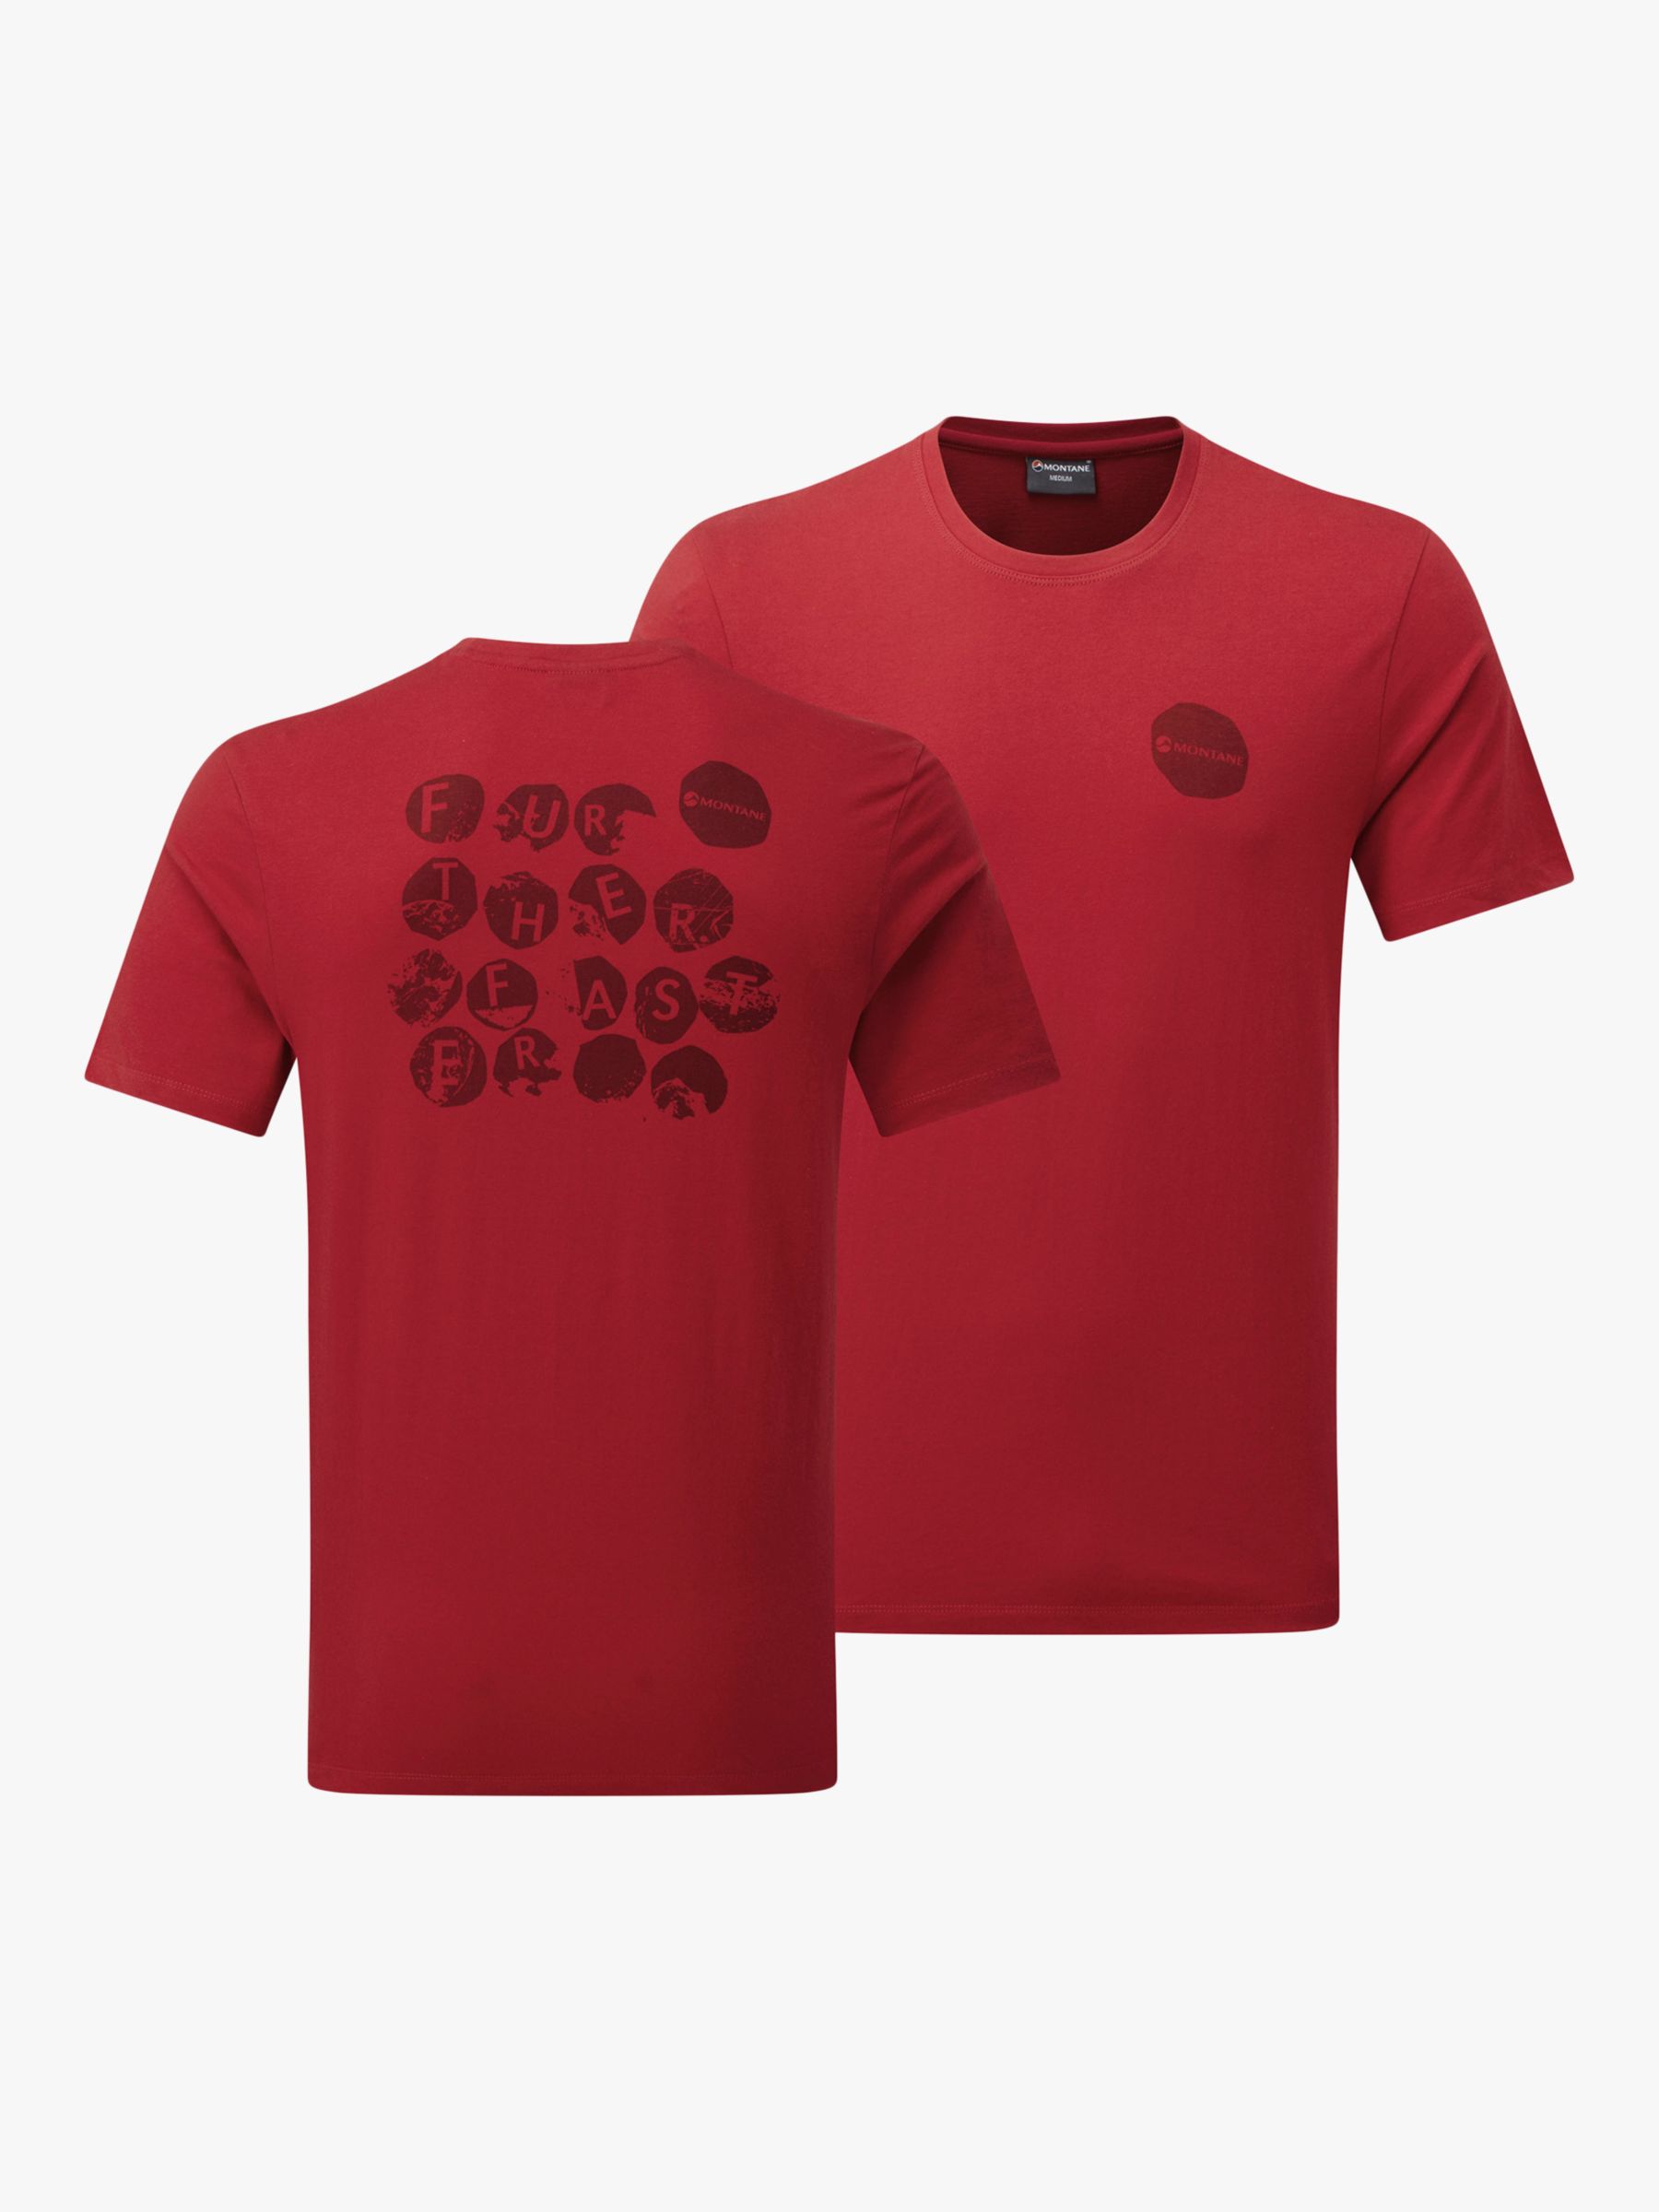 Montane Transpose Organic Cotton T-Shirt, Acer Red, L